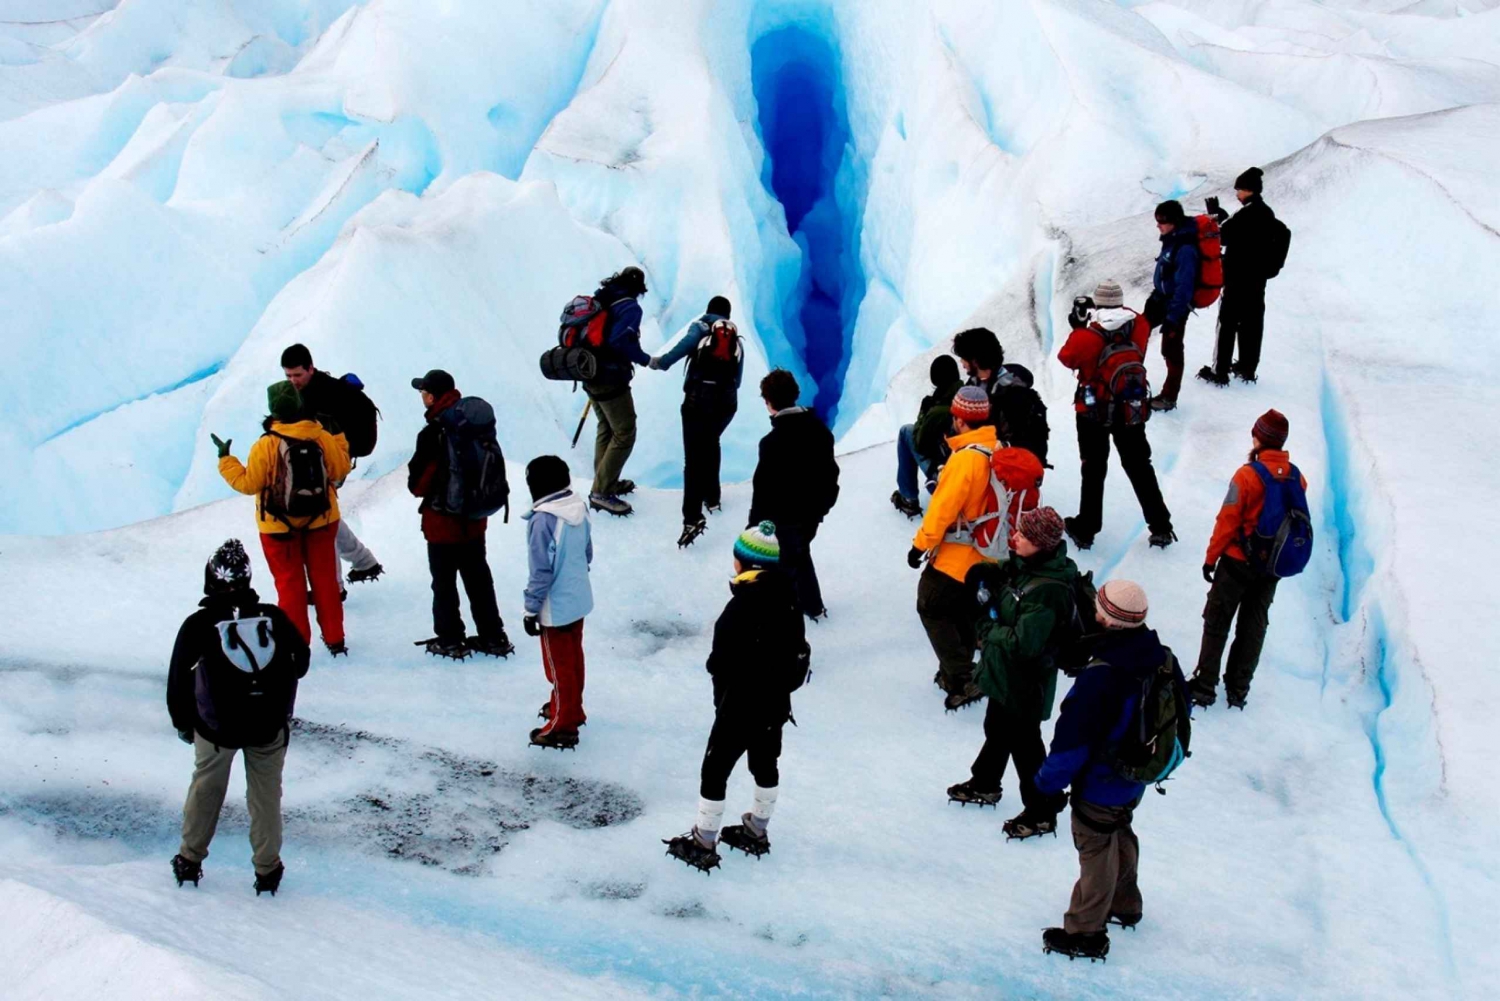 El Calafate: Mini trekking na geleira Perito Moreno com traslado